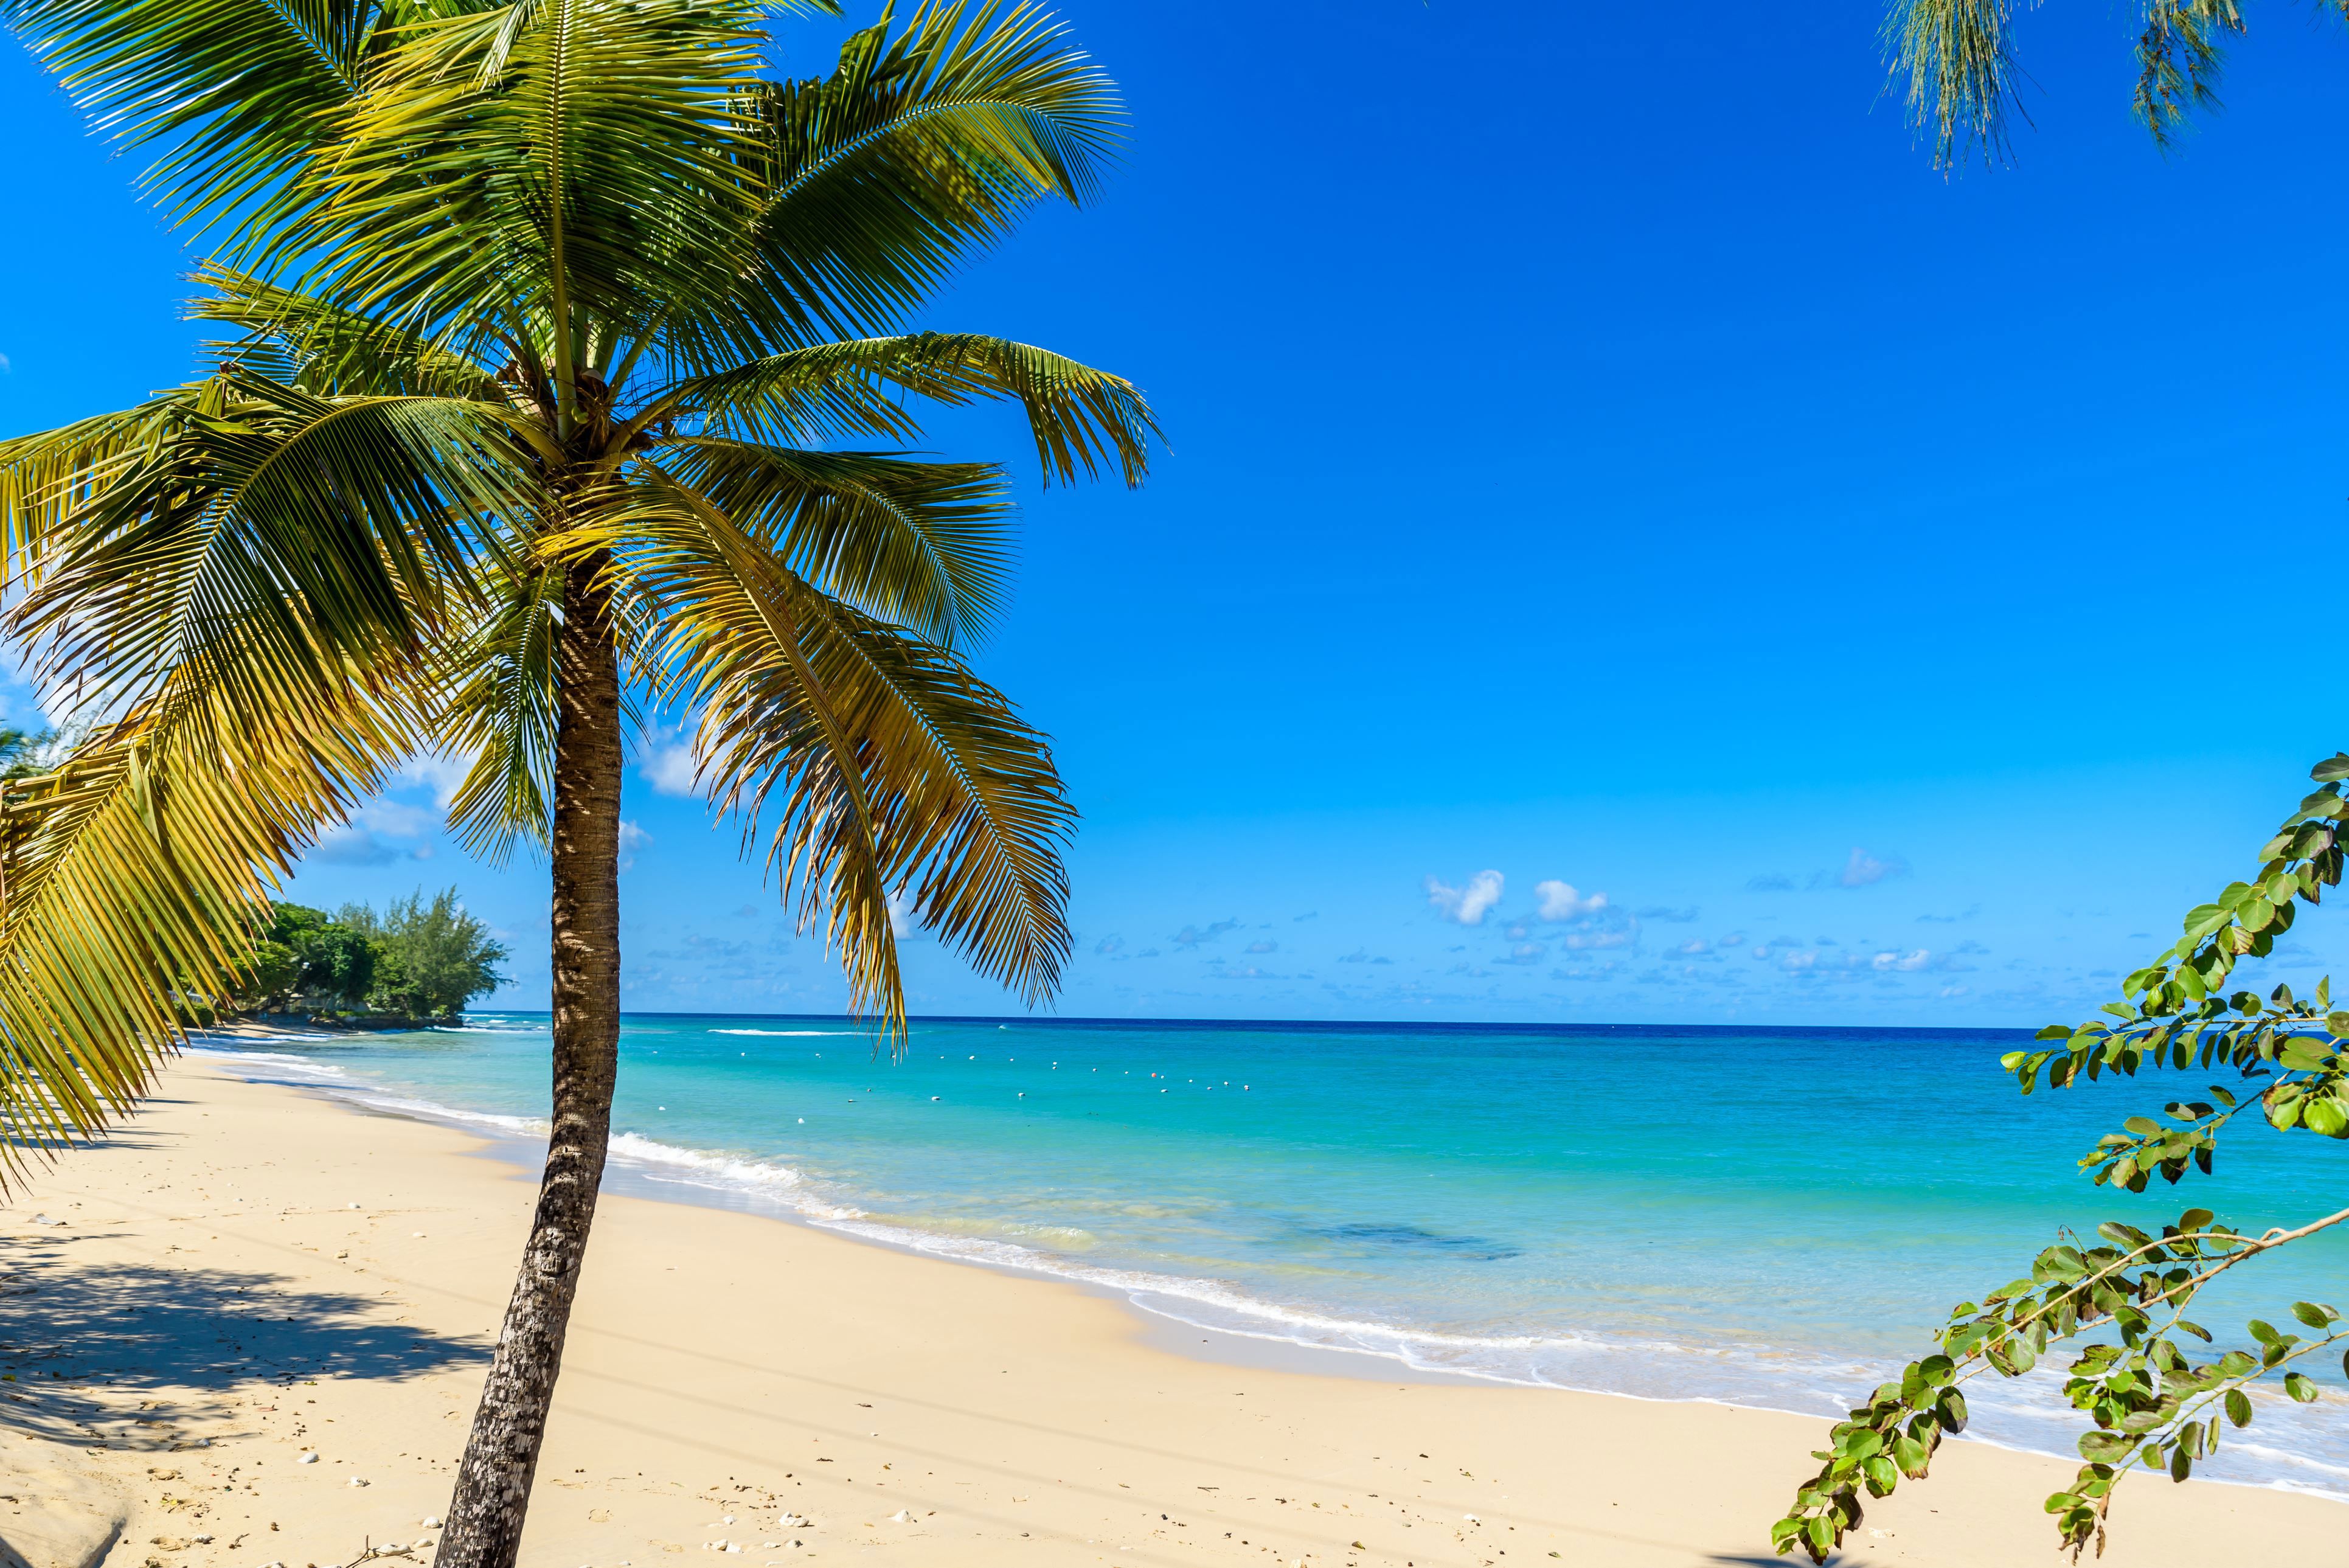 Pristine beaches of Barbados, Caribbean